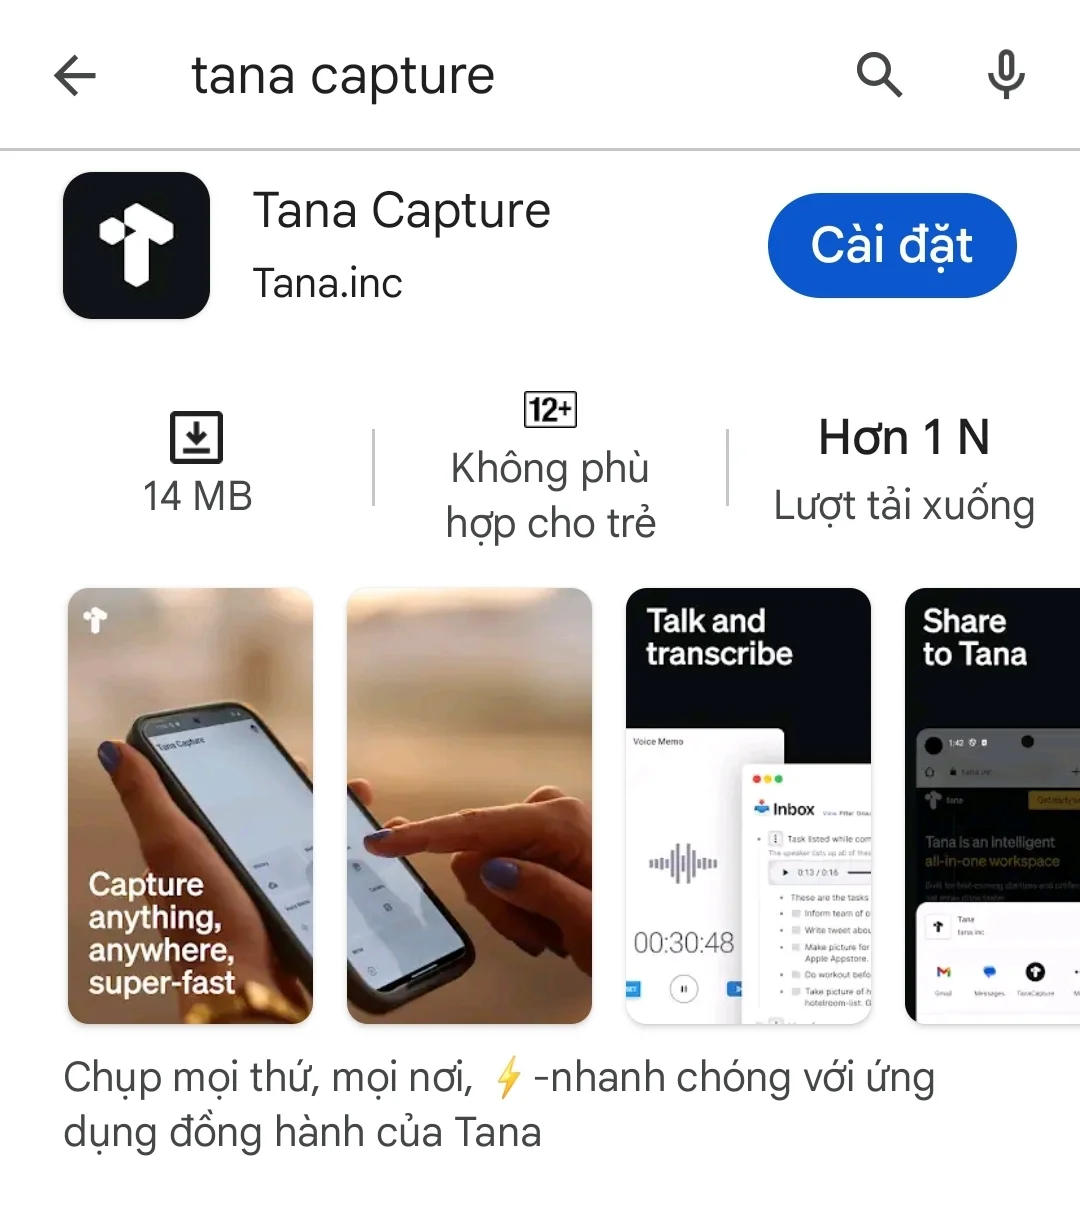 Tana on Google Play Store